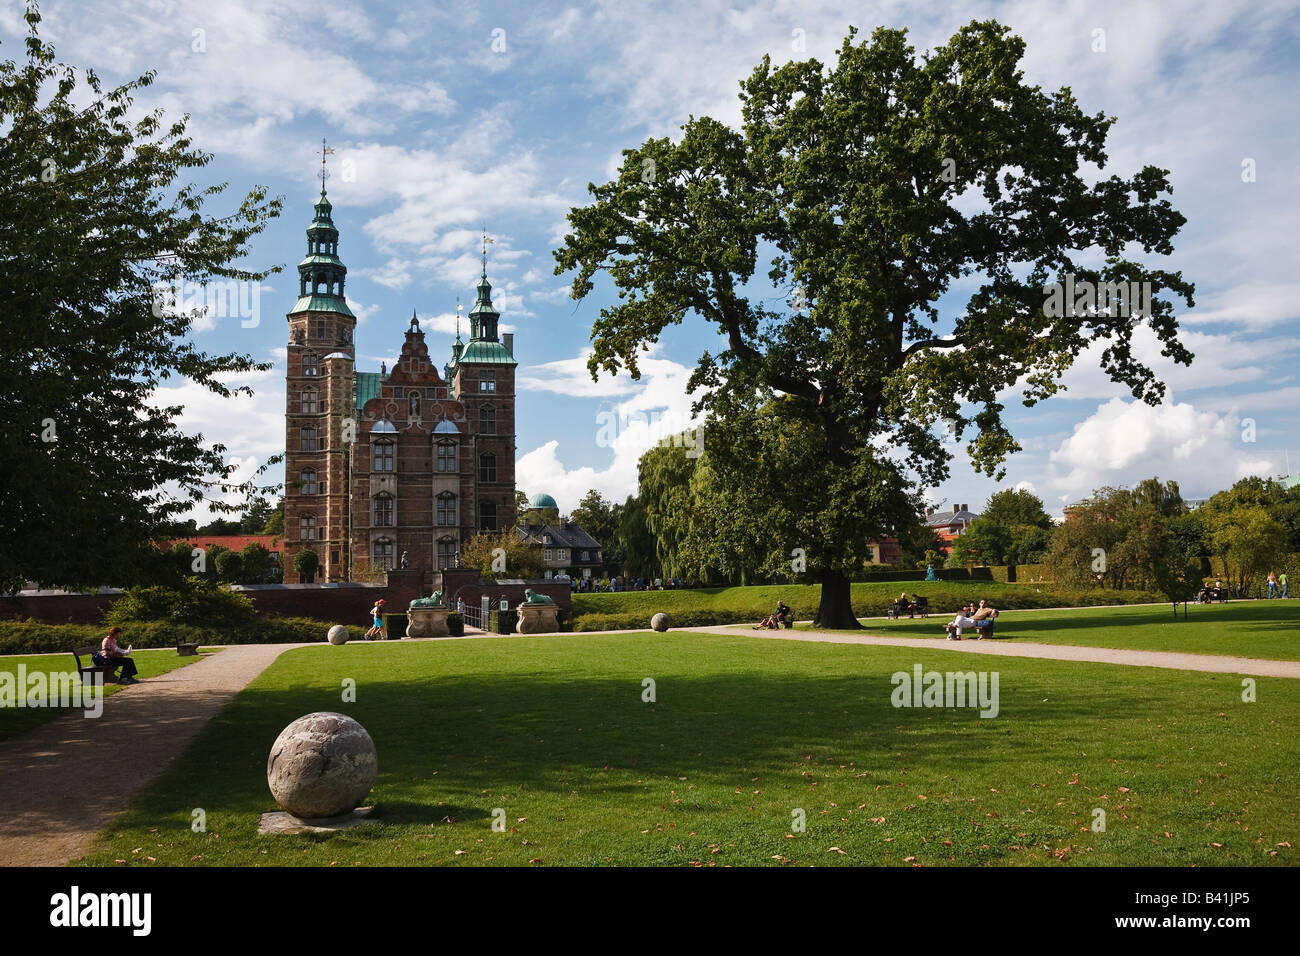 Rosenborg Slot (Trésor Royal) dans le jardin royal, Copenagen, Danemark Banque D'Images